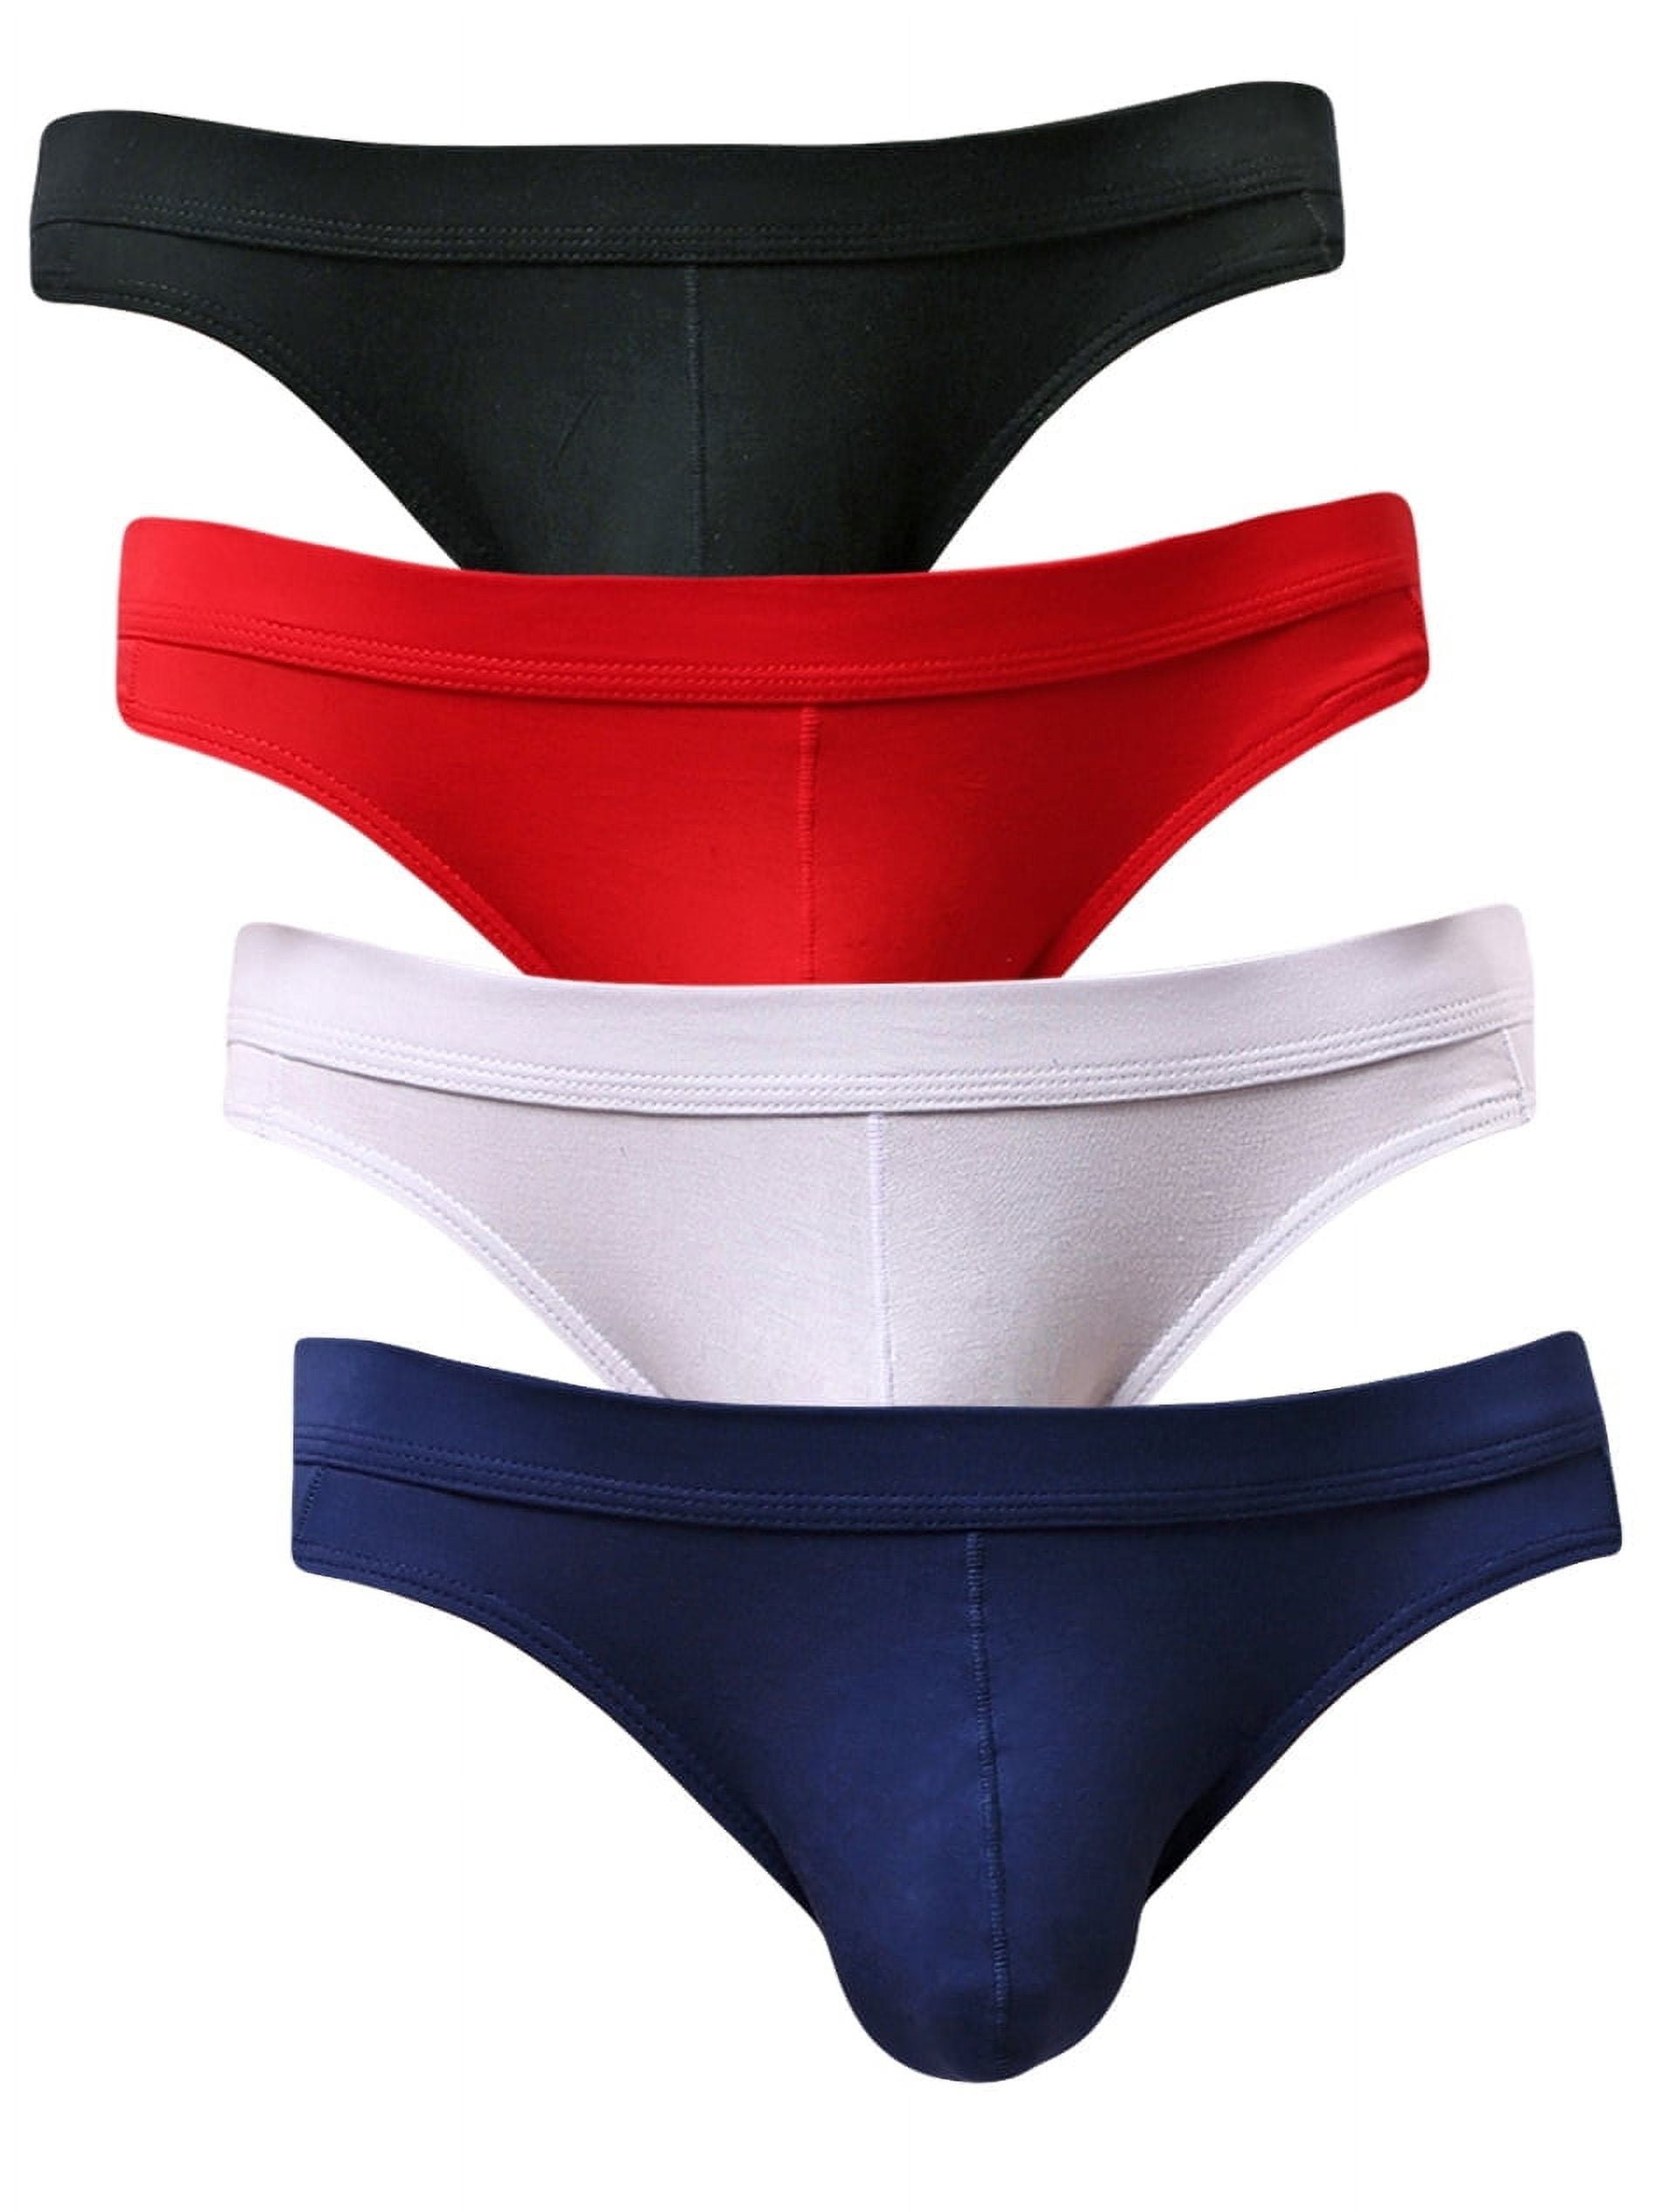 Yuyangdpb Men's Supersoft Modal Briefs Low Rise Lightweight Underwear ...